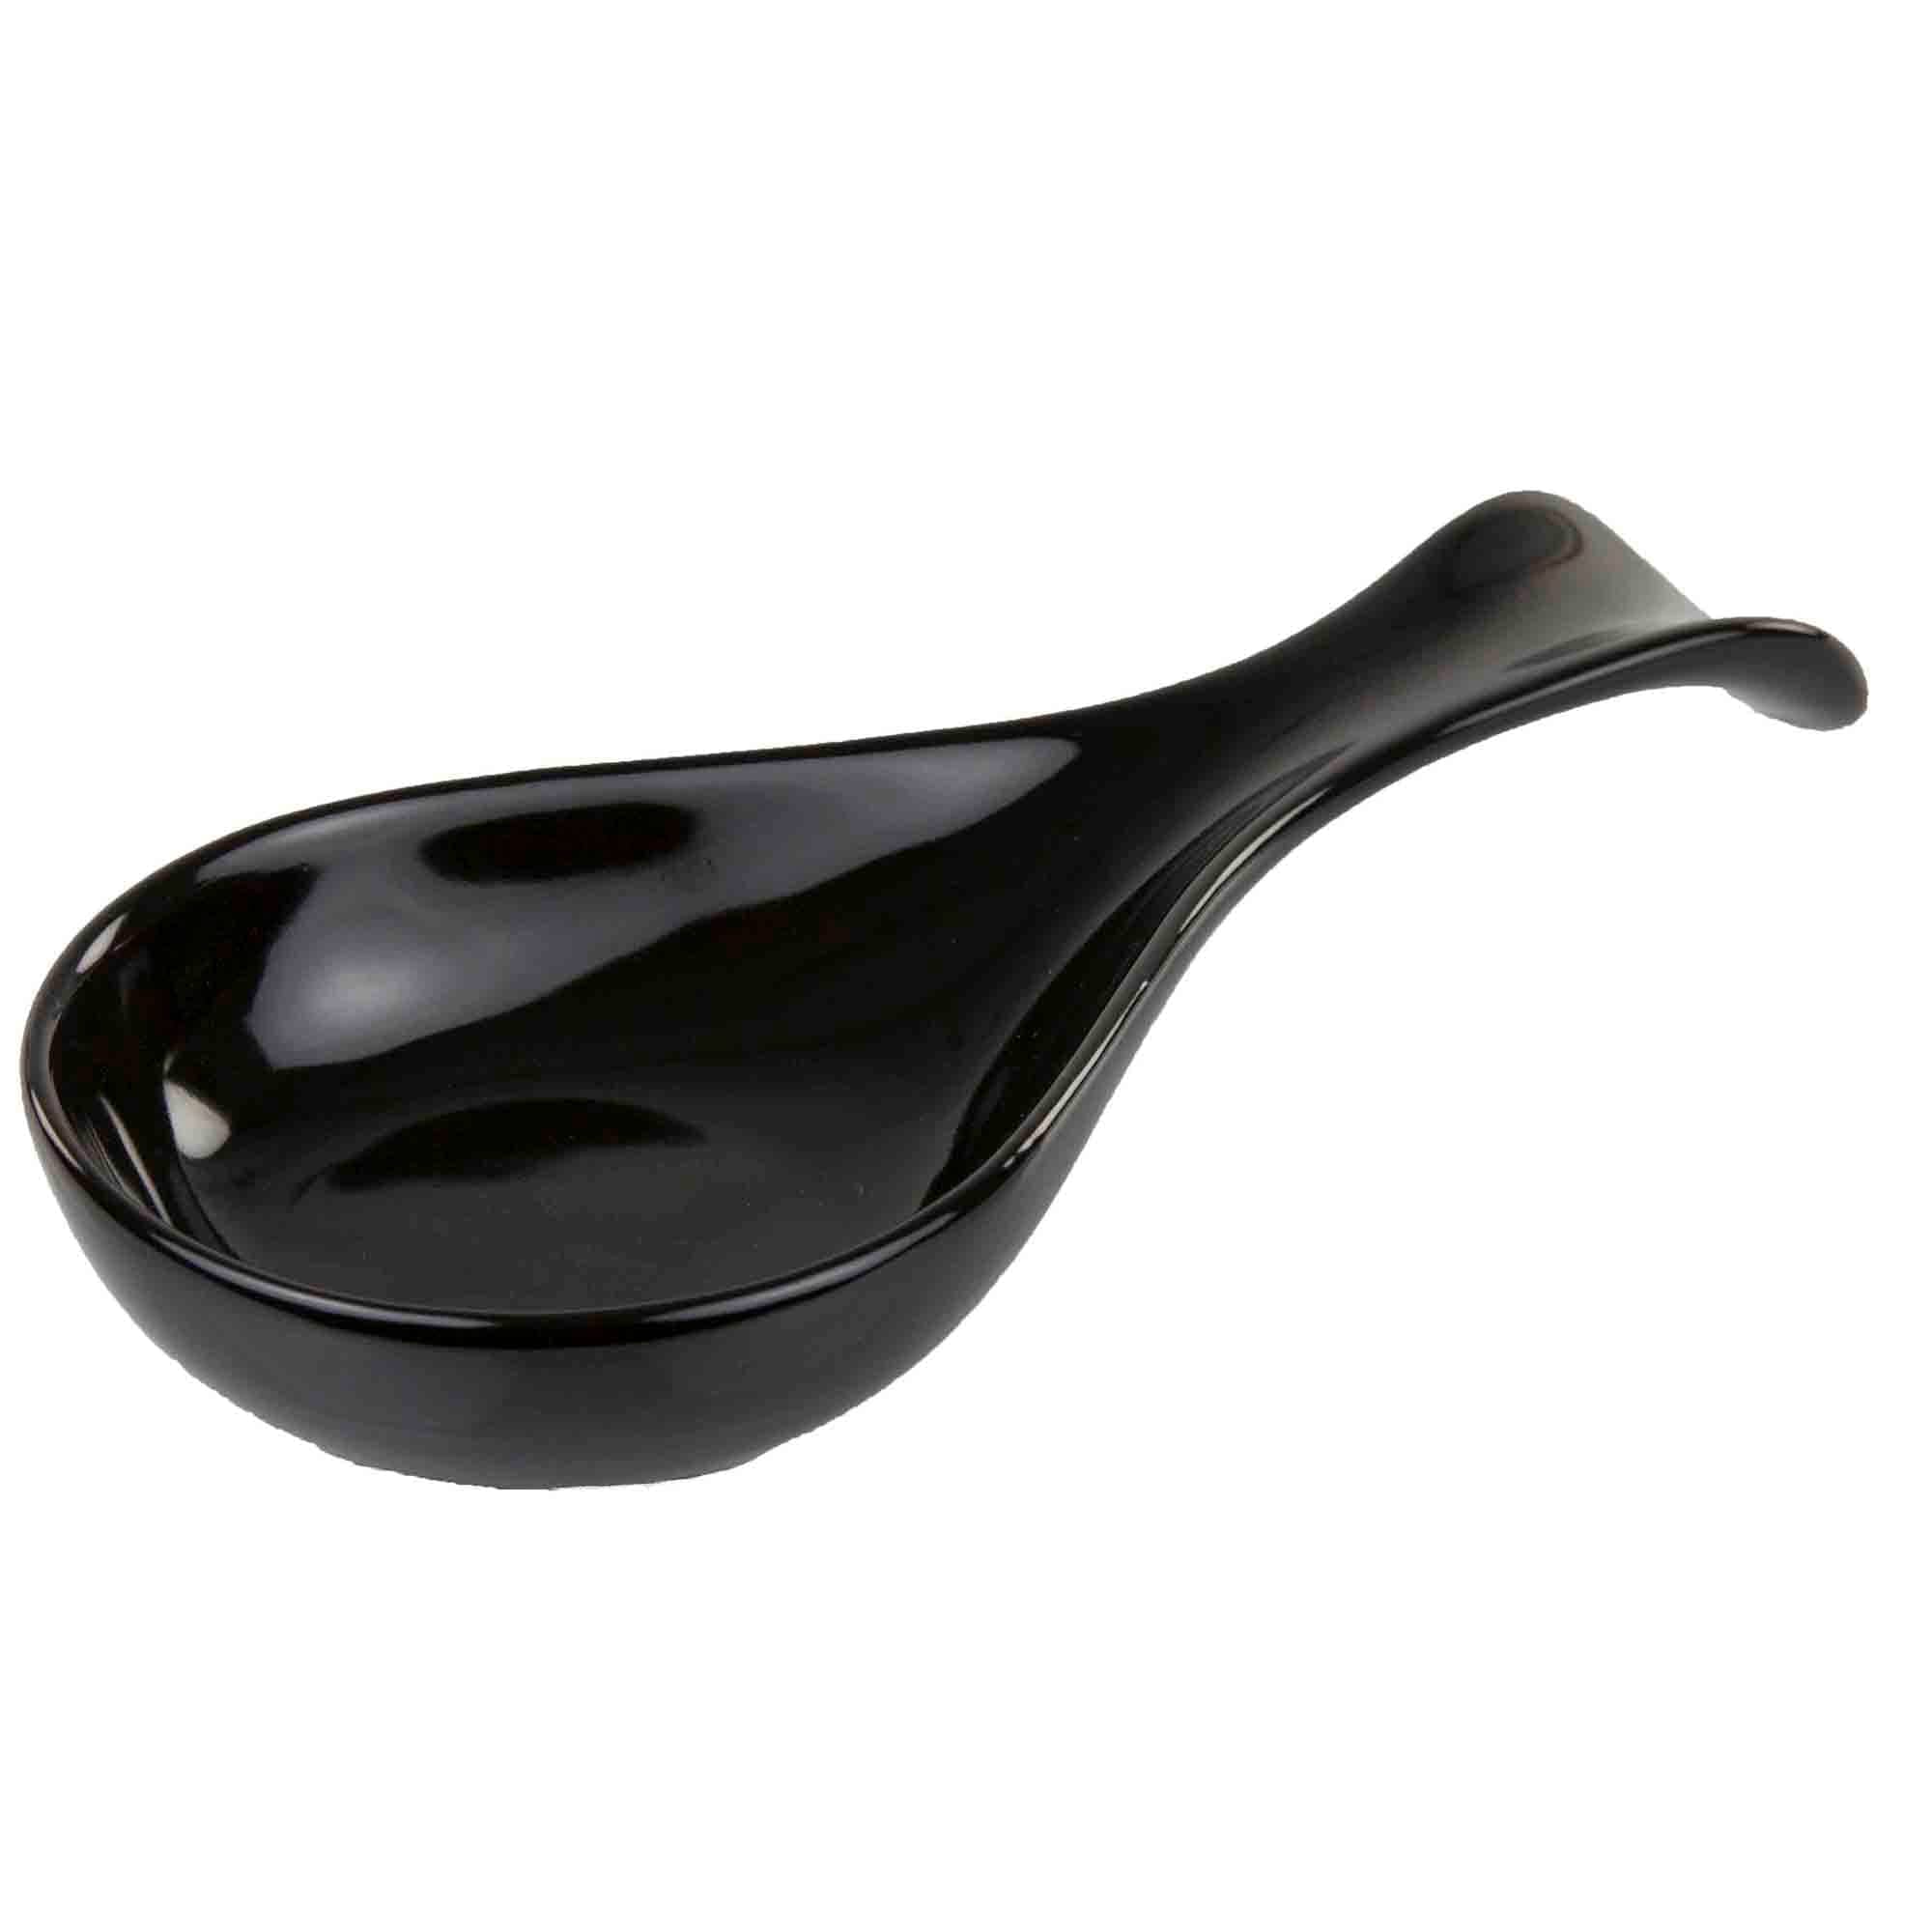 Home Basics Ceramic Spoon Rest, Black $4.00 EACH, CASE PACK OF 12